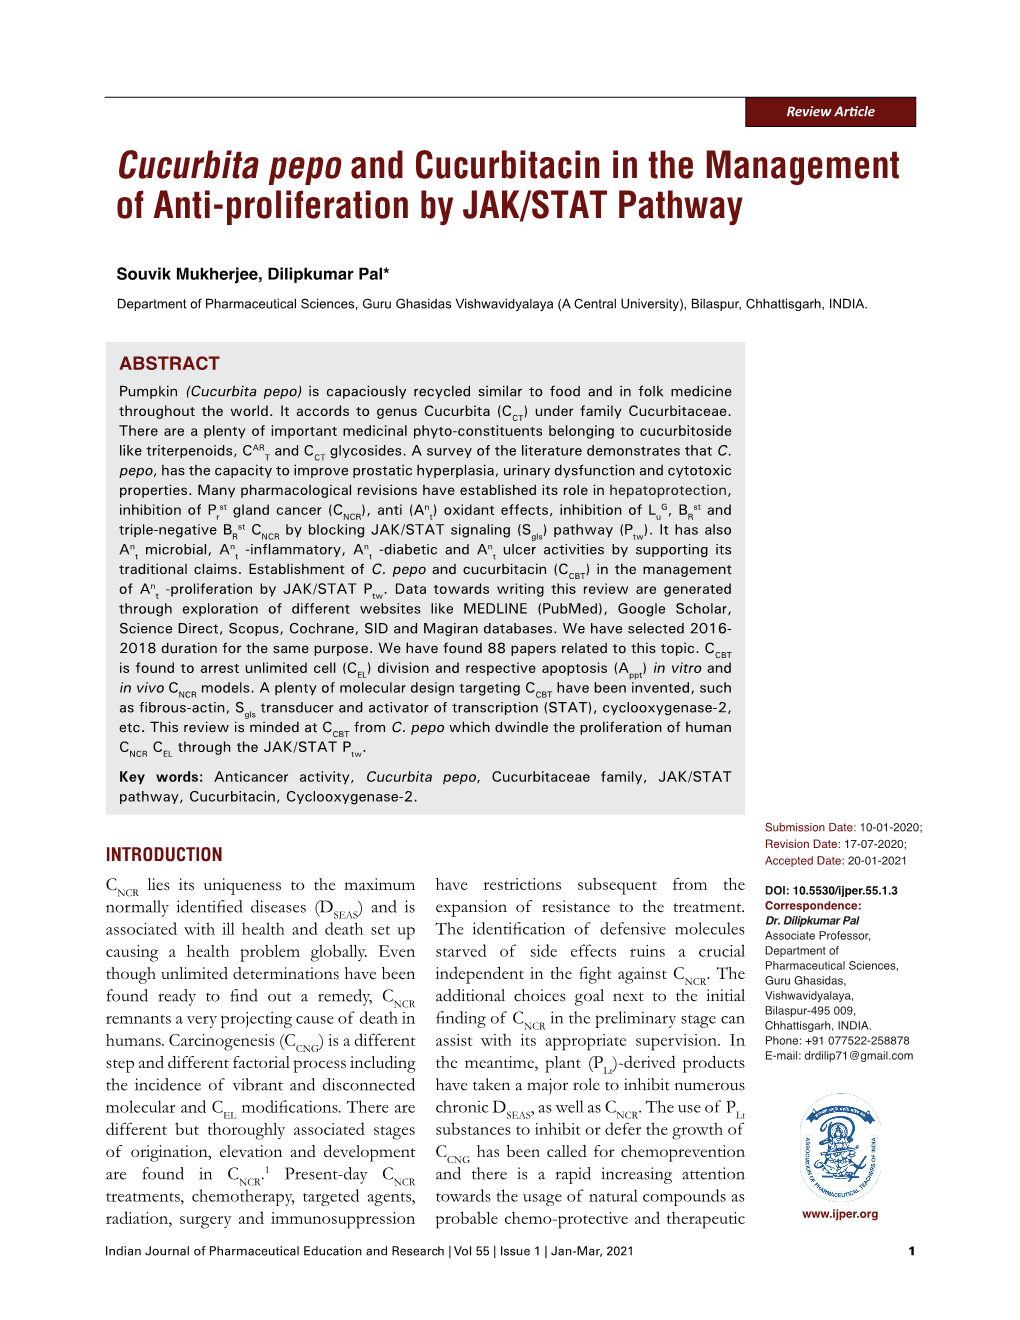 Cucurbita Pepo and Cucurbitacin in the Management of Anti-Proliferation by JAK/STAT Pathway